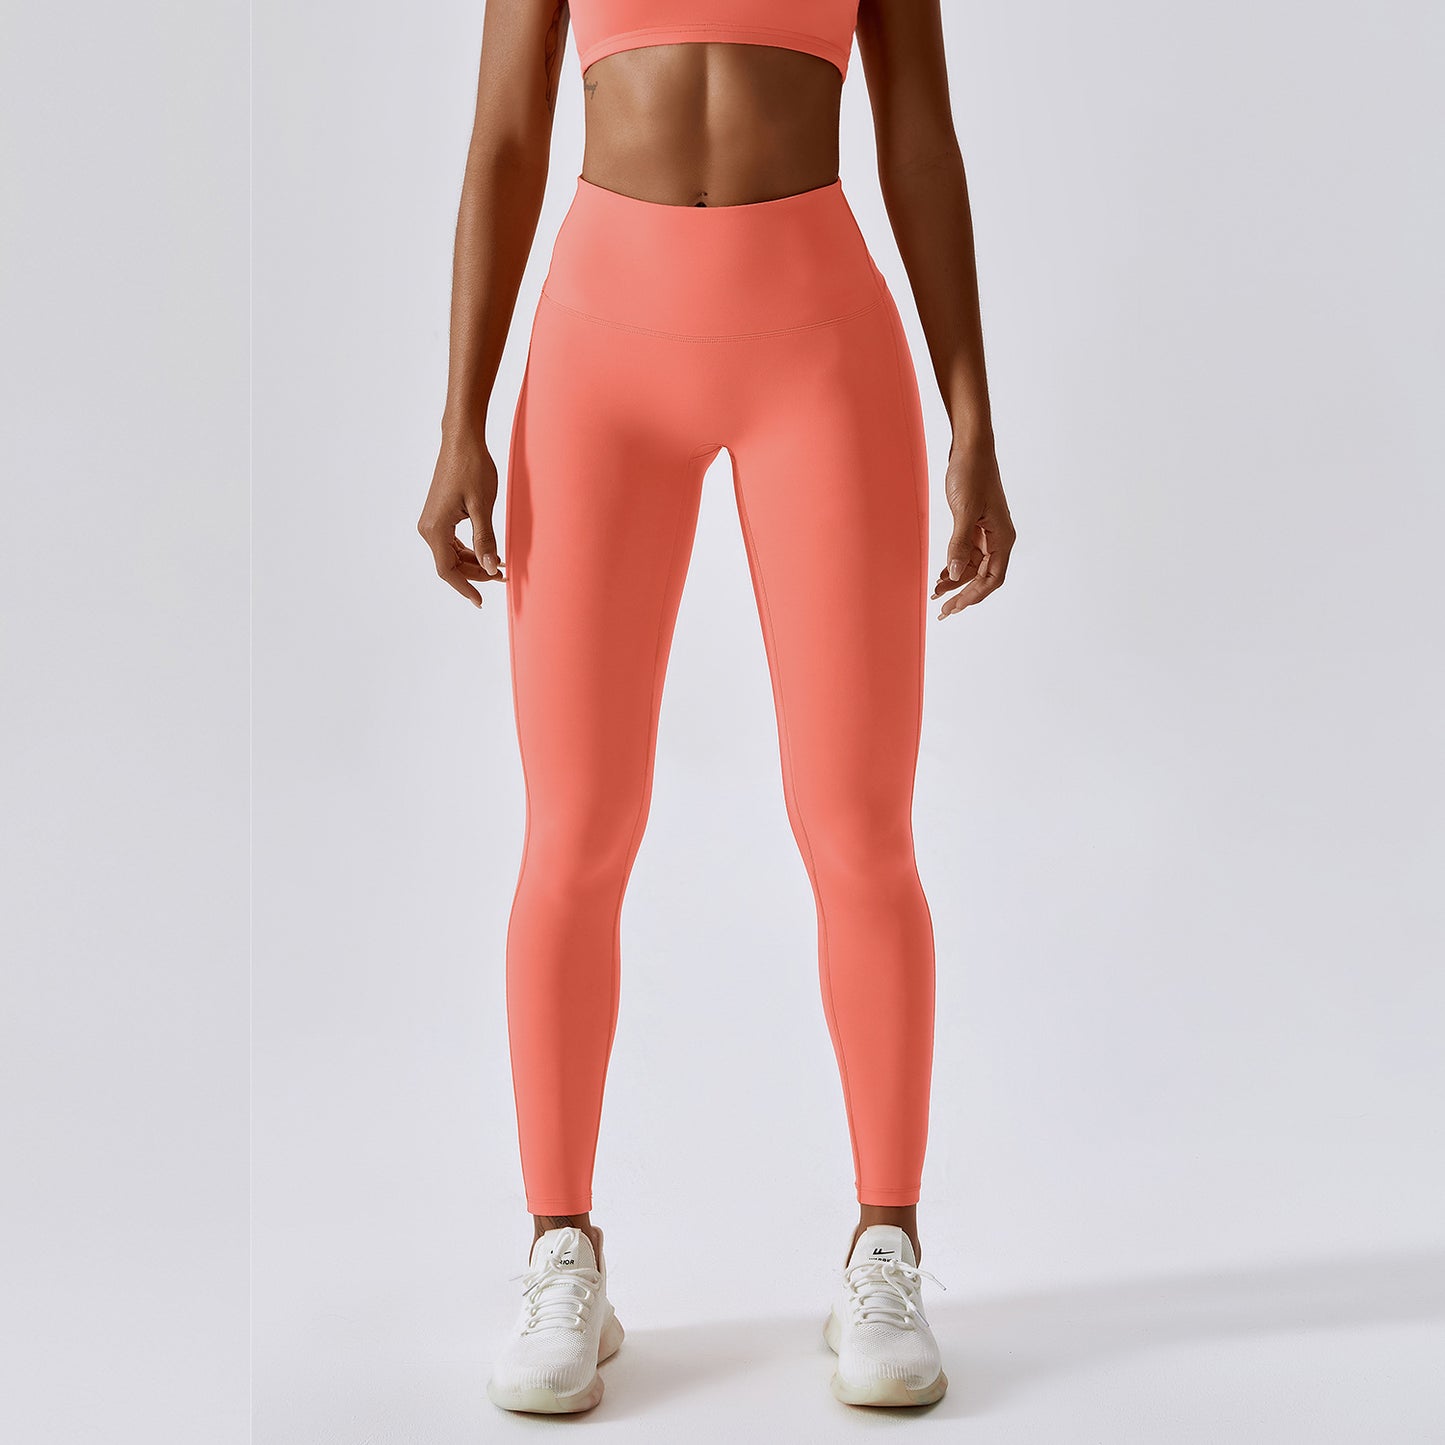 Yoga Pants Hip Lifting Running  Fitness Pants Candy Color High Waist